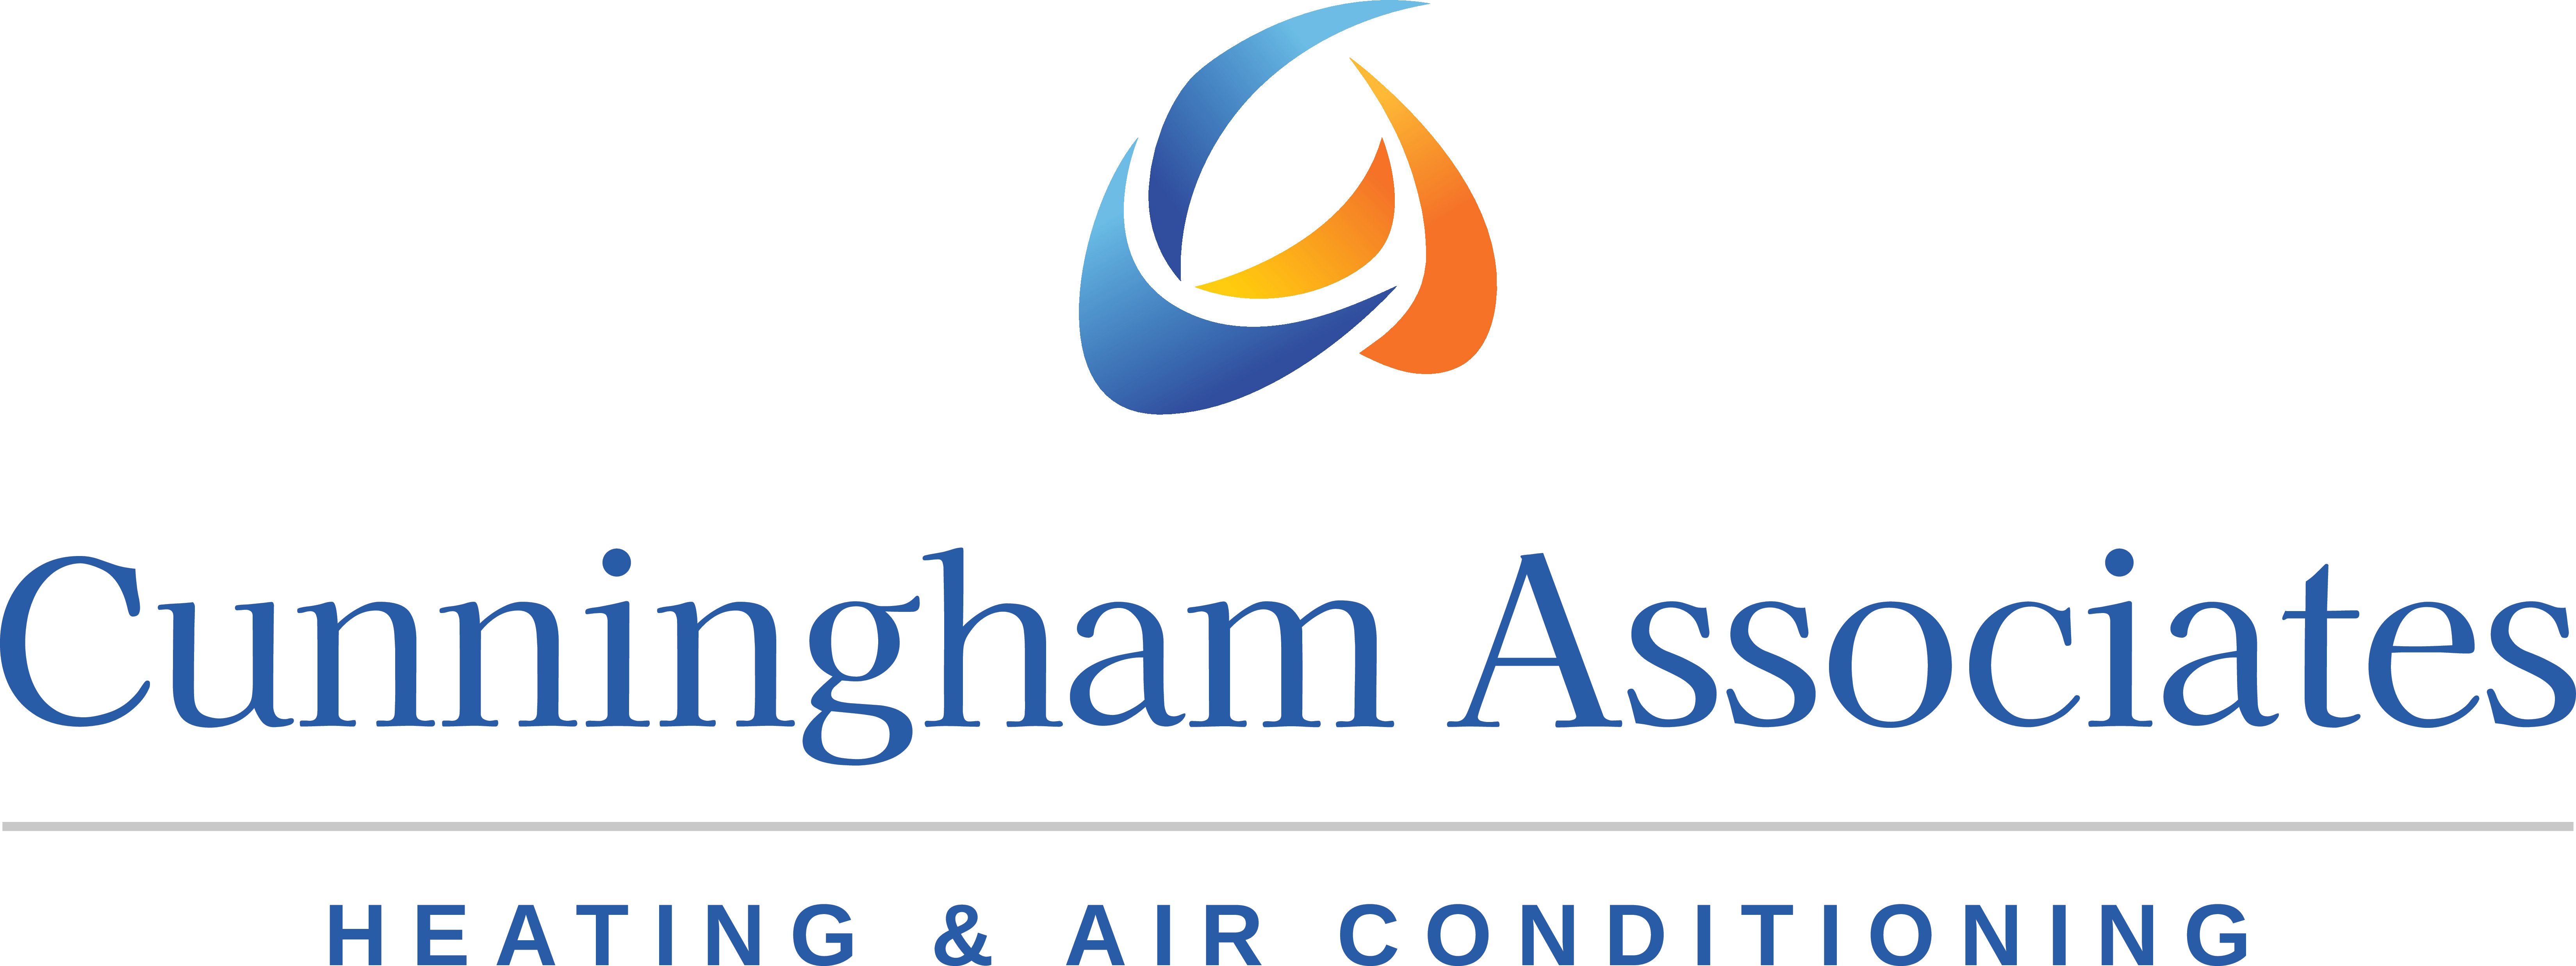 Cunningham Associates Heating & Air Conditioning Logo